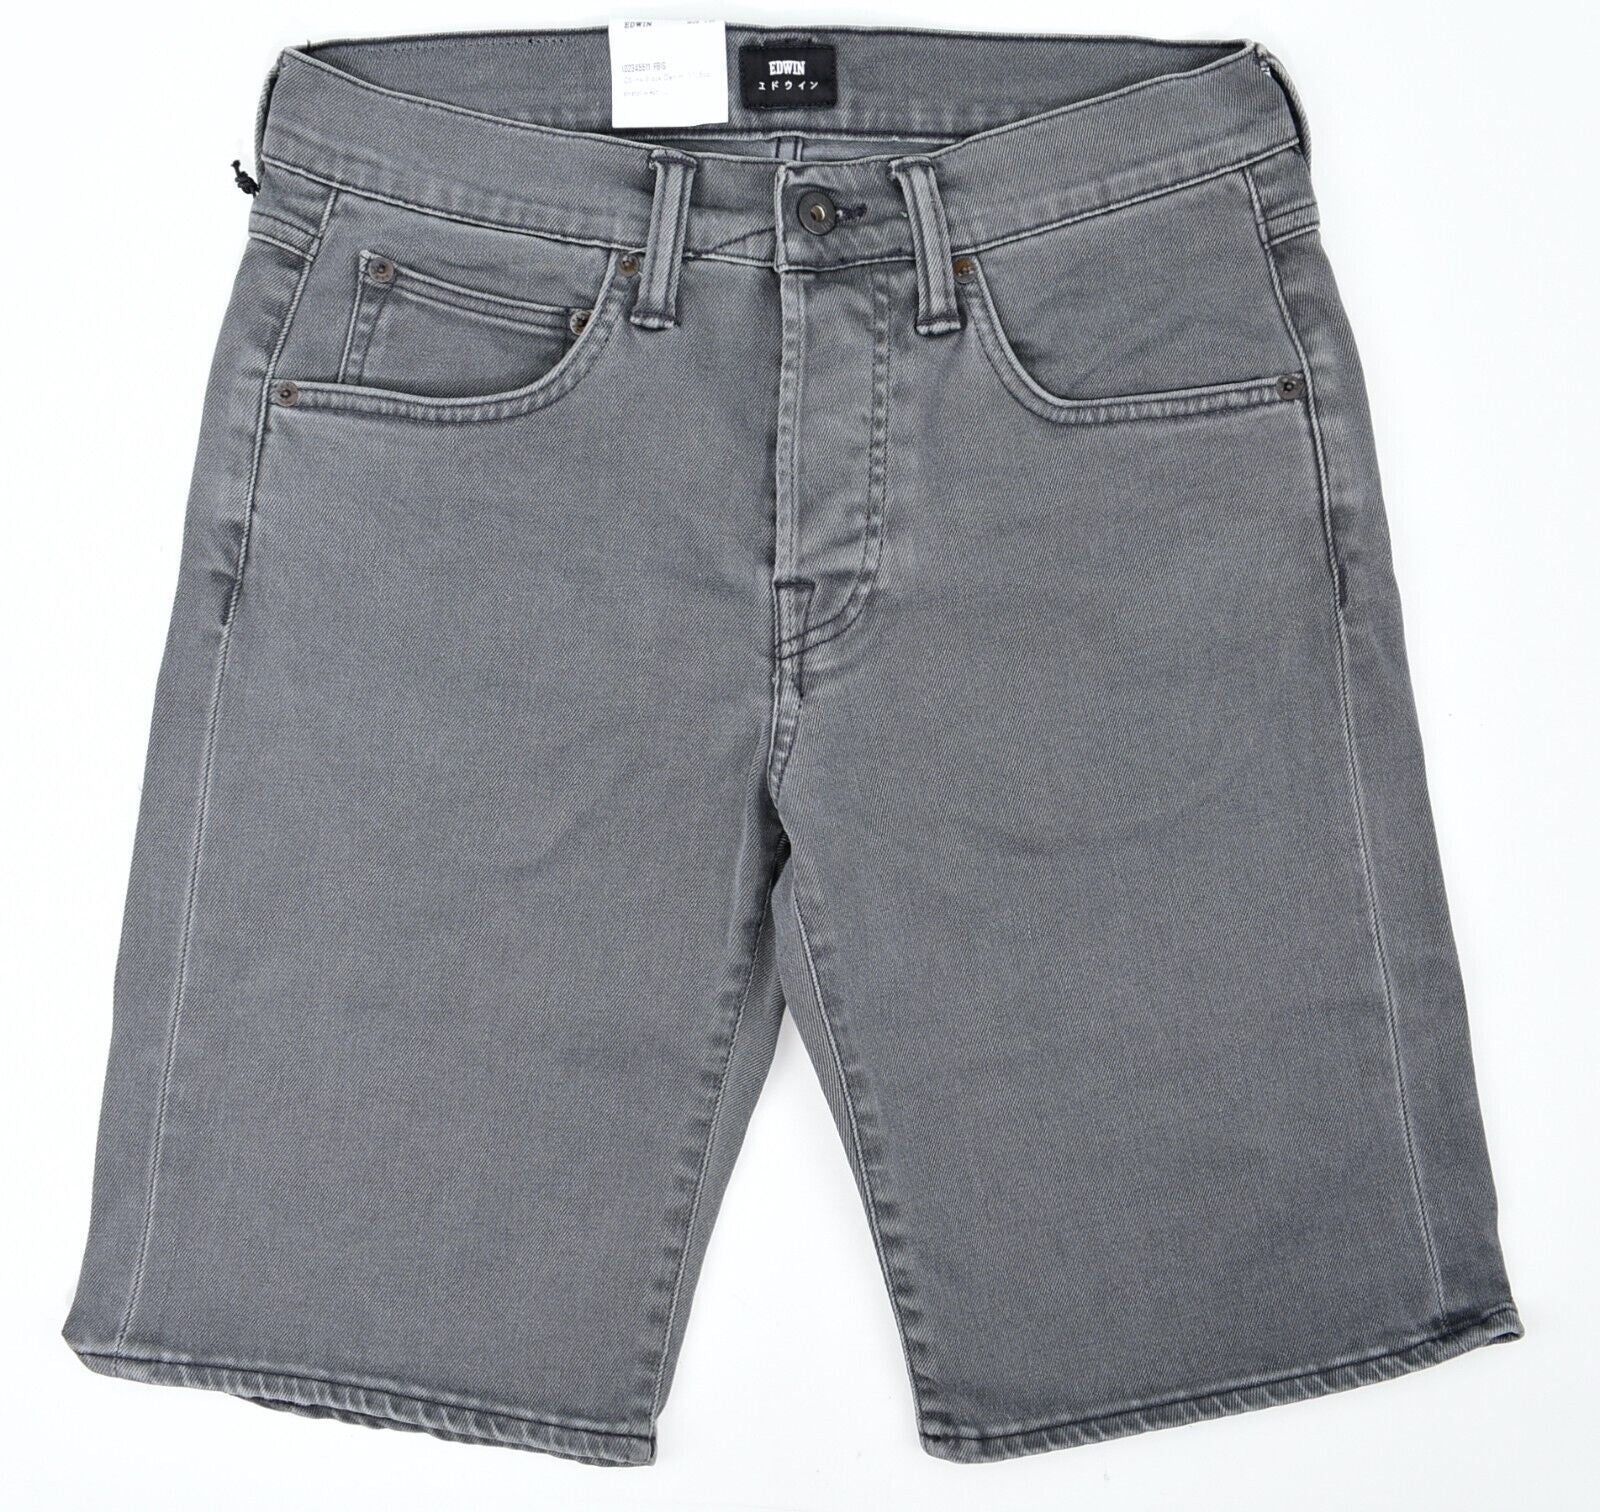 EDWIN ED-55 Mens Denim Shorts, Straight Leg, Washed Black (Grey), size 29